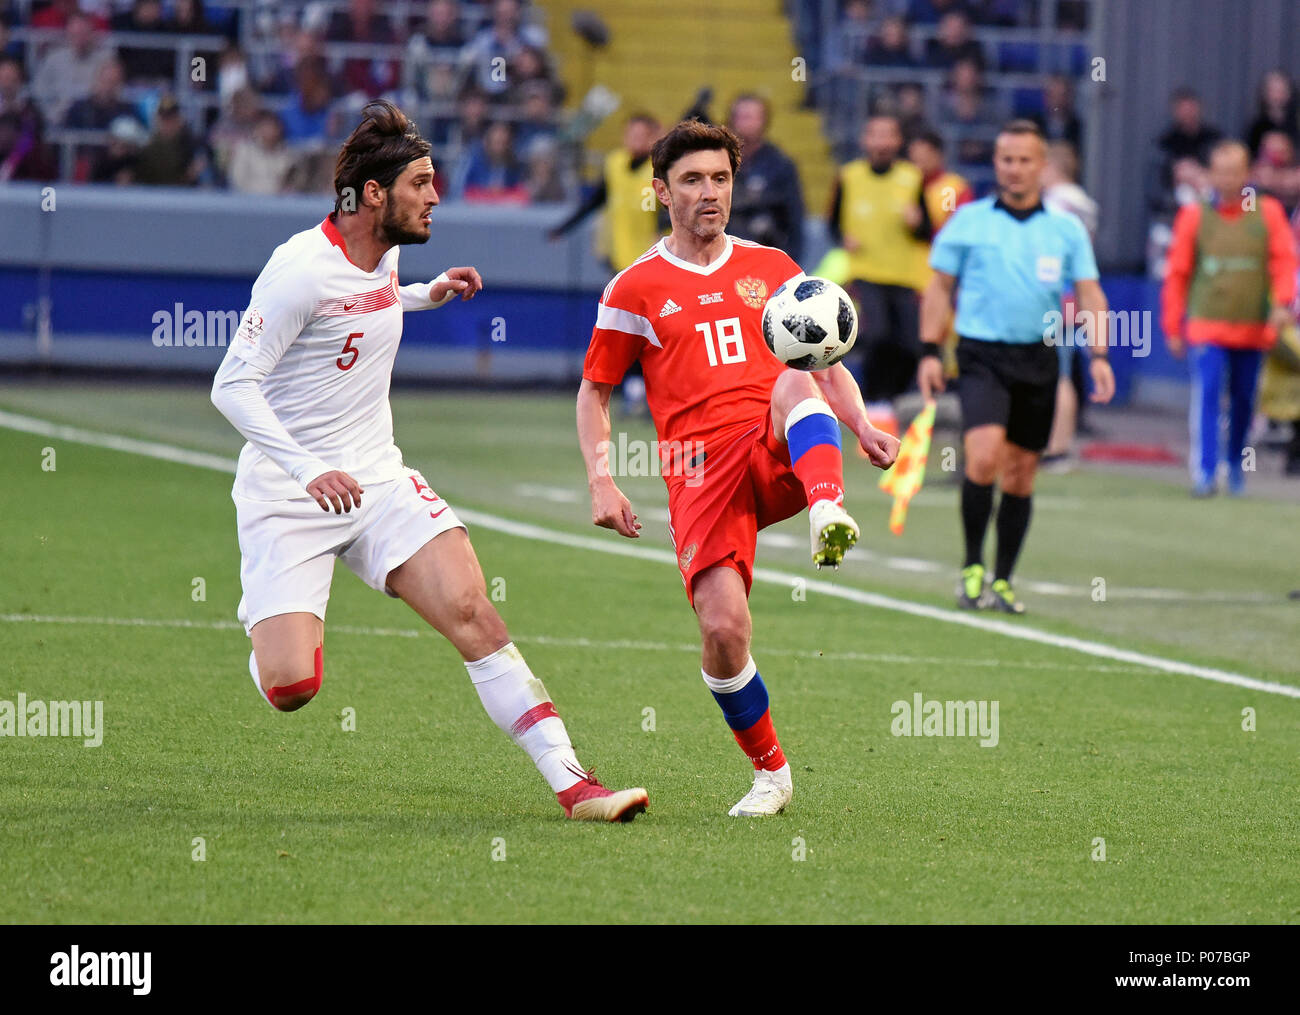 Moscow, Russia - June 5, 2018. Russian midfielder Yuri Zhirkov against Turkish midfielder Okay Yokuslu during international friendly against Russia at Stock Photo